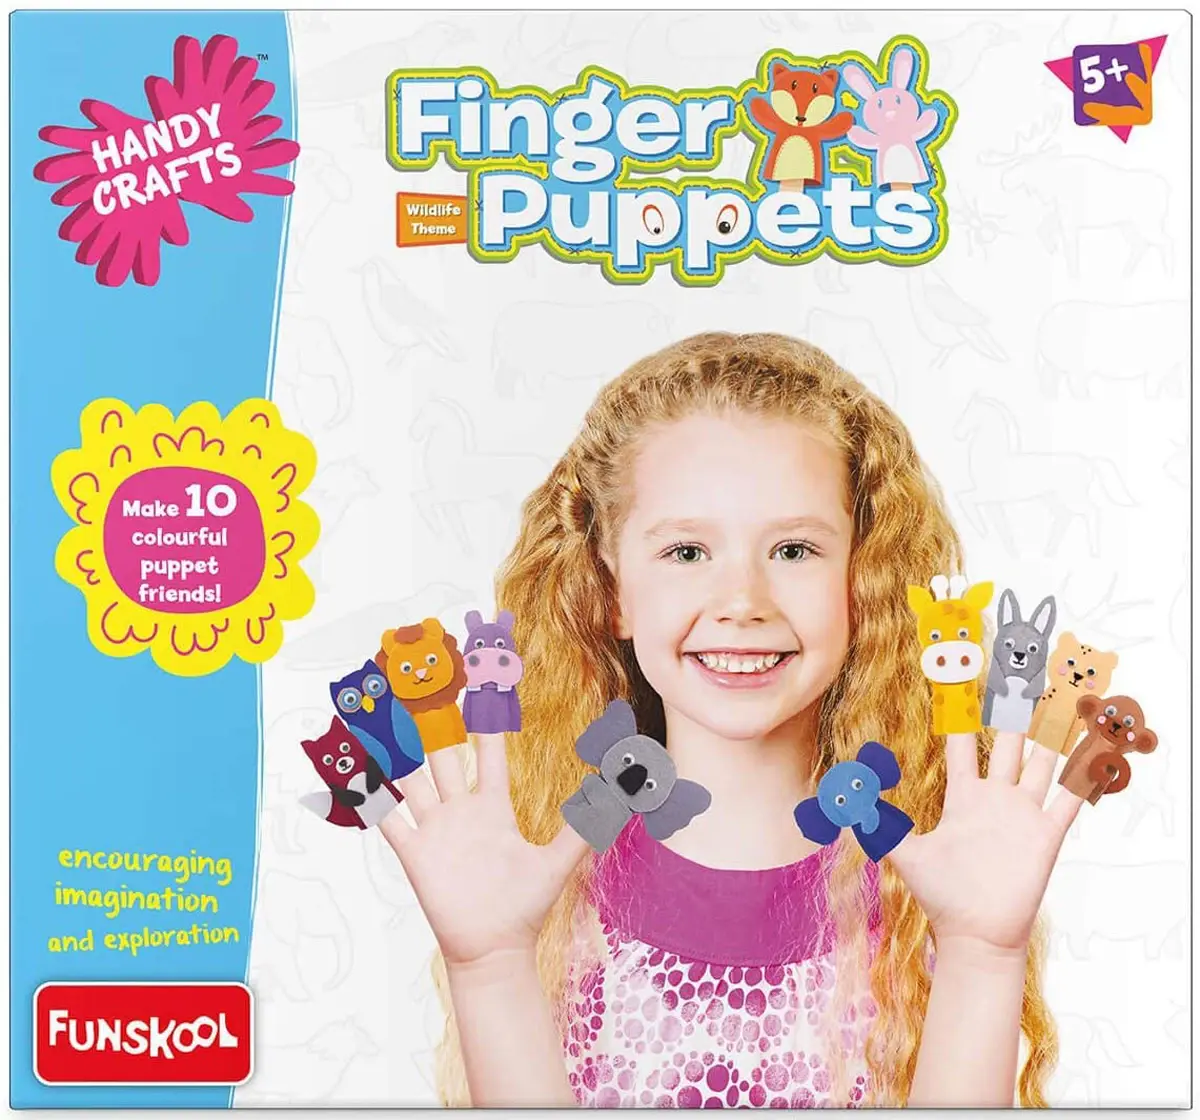 Handycrafts Finger Puppets Plastic Multicolour 7Y+